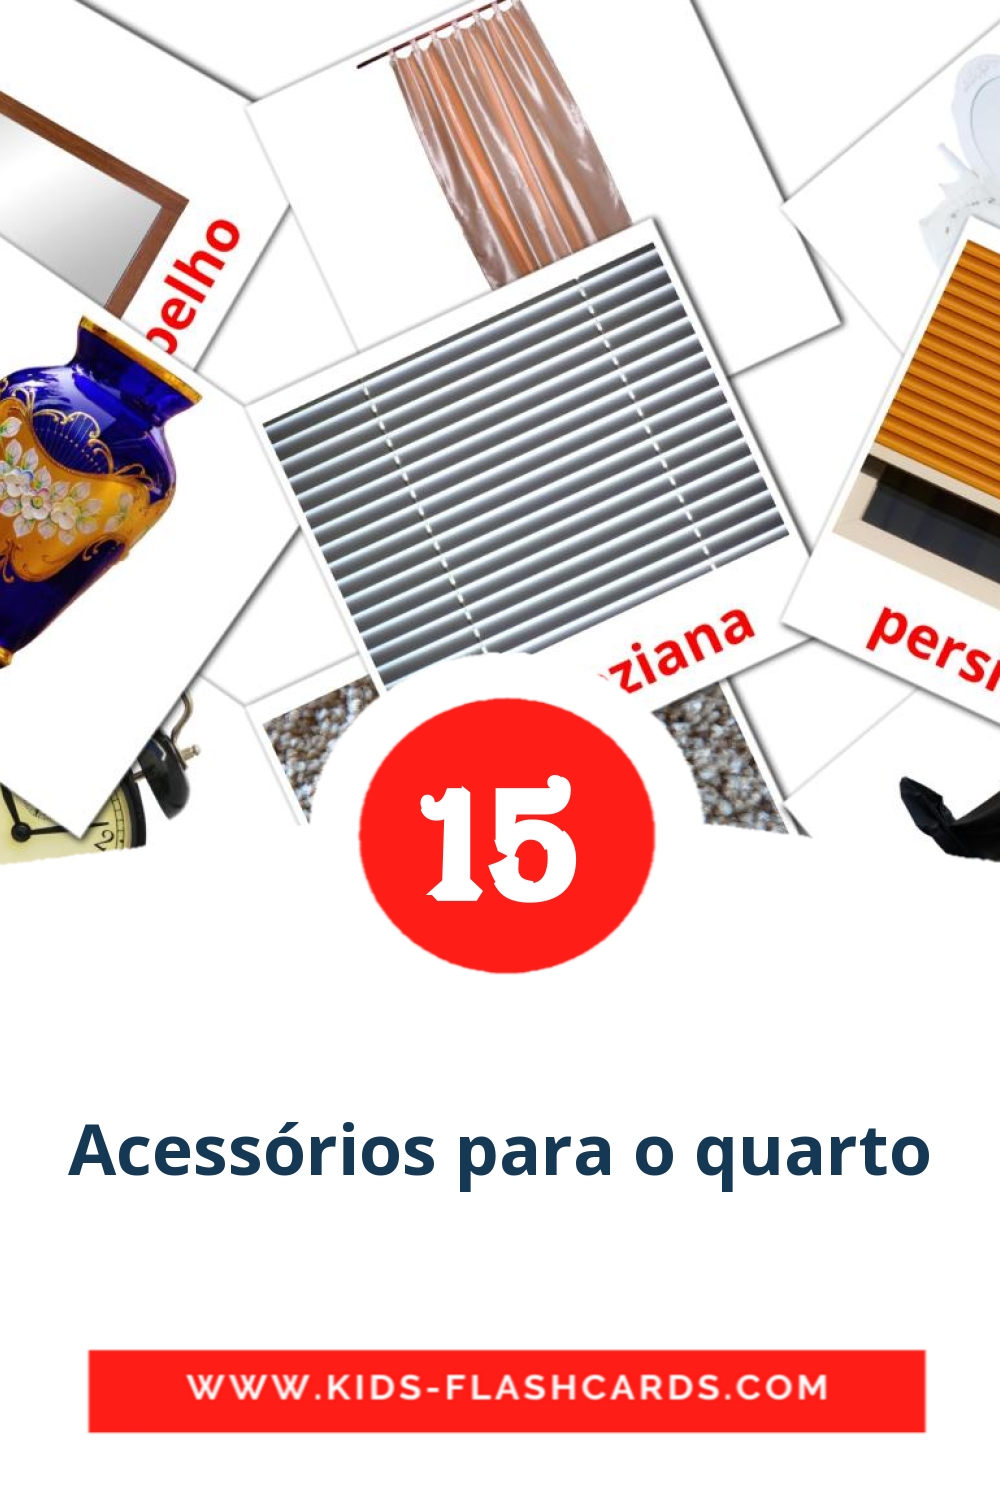 18 Acessórios para o quarto Picture Cards for Kindergarden in portuguese